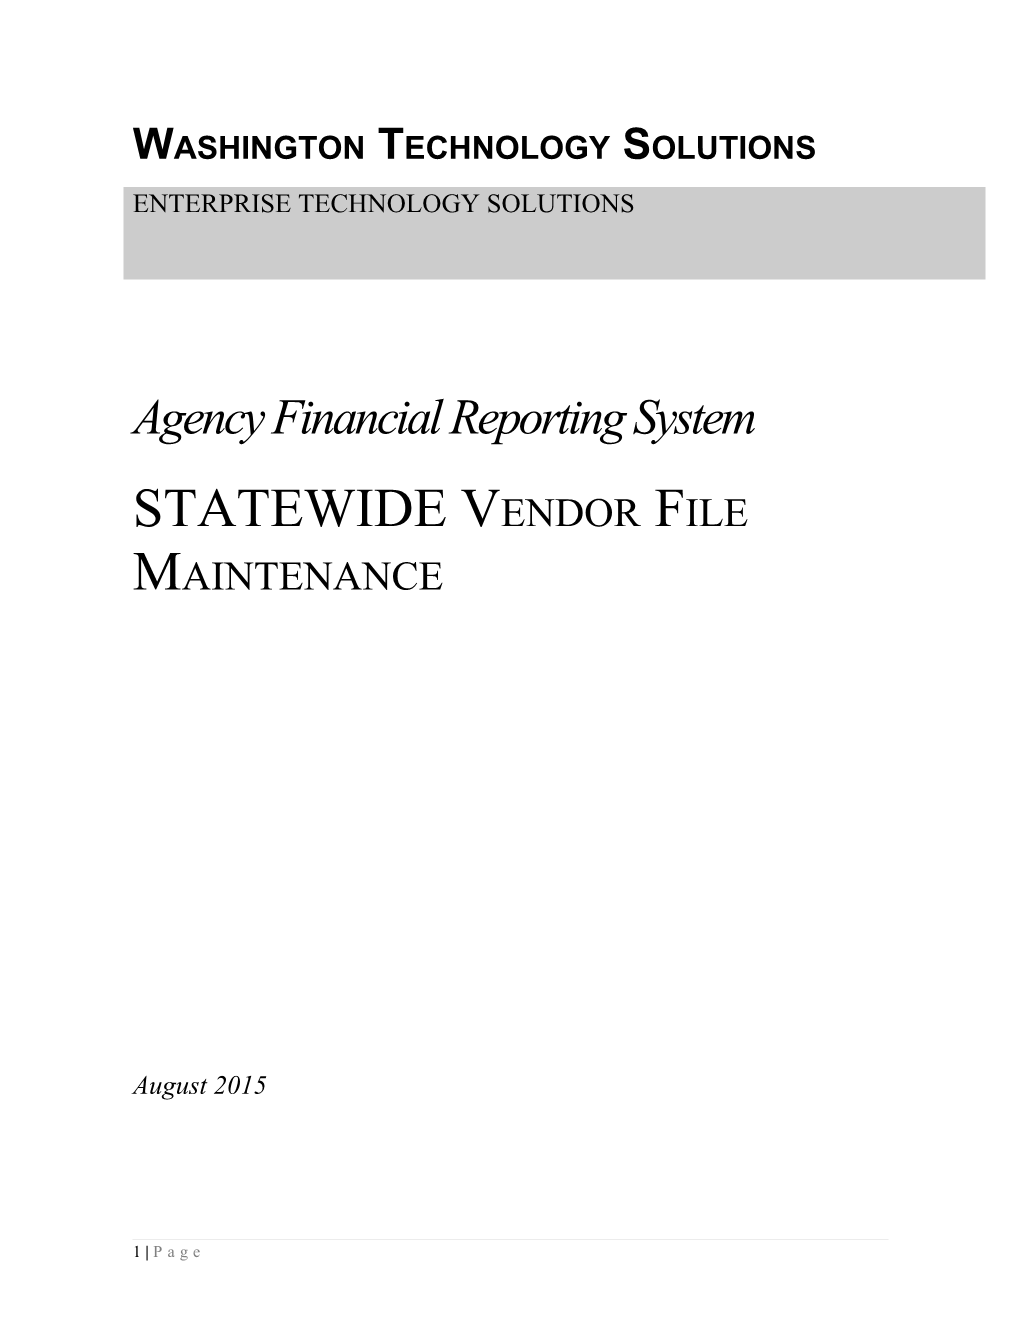 Statewide Vendor File Maintenance